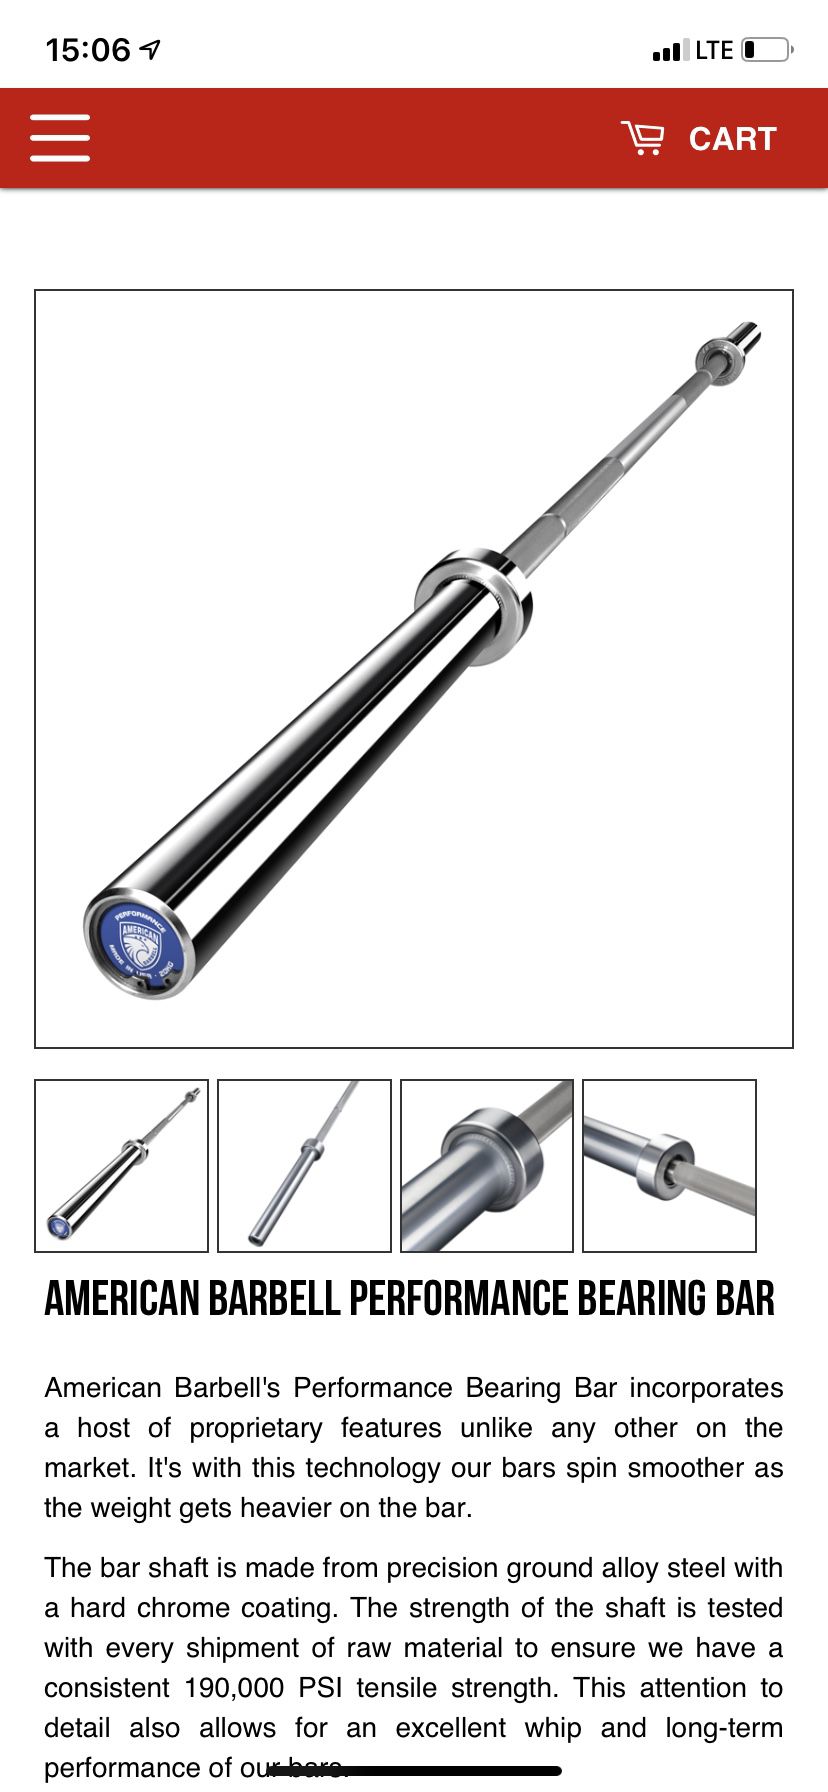 American barbell performance bearing bar